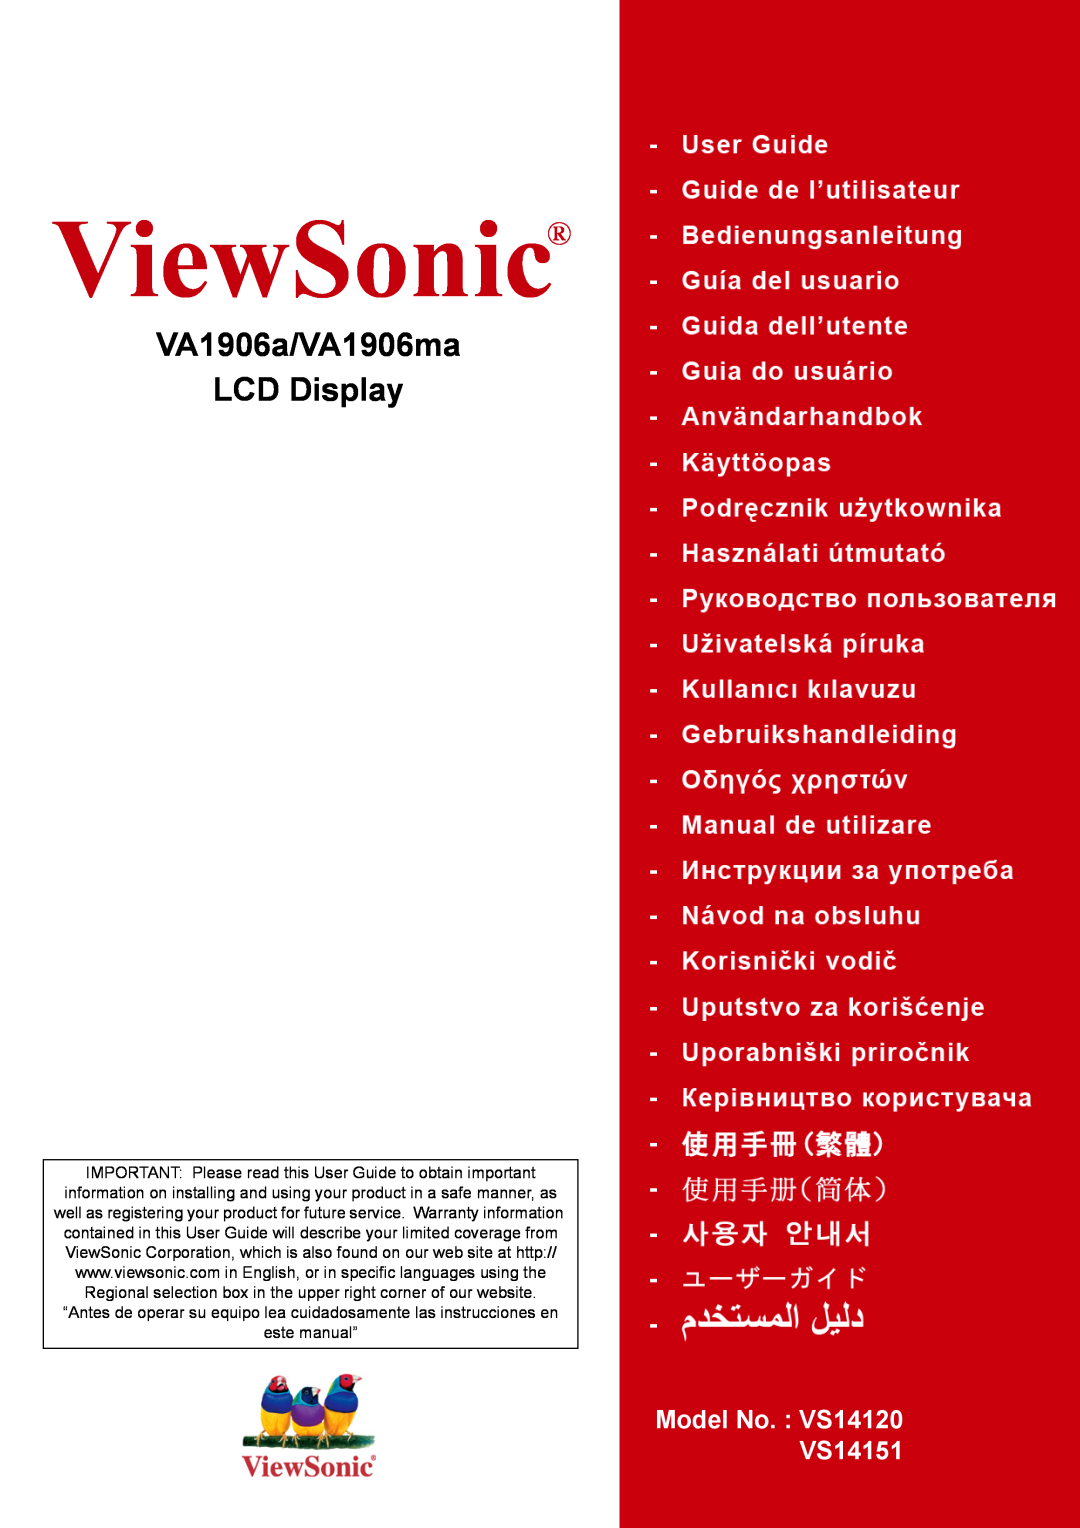 ViewSonic warranty VA1906a/VA1906ma LCD Display, ViewSonic, Model No. VS14120 VS14151 